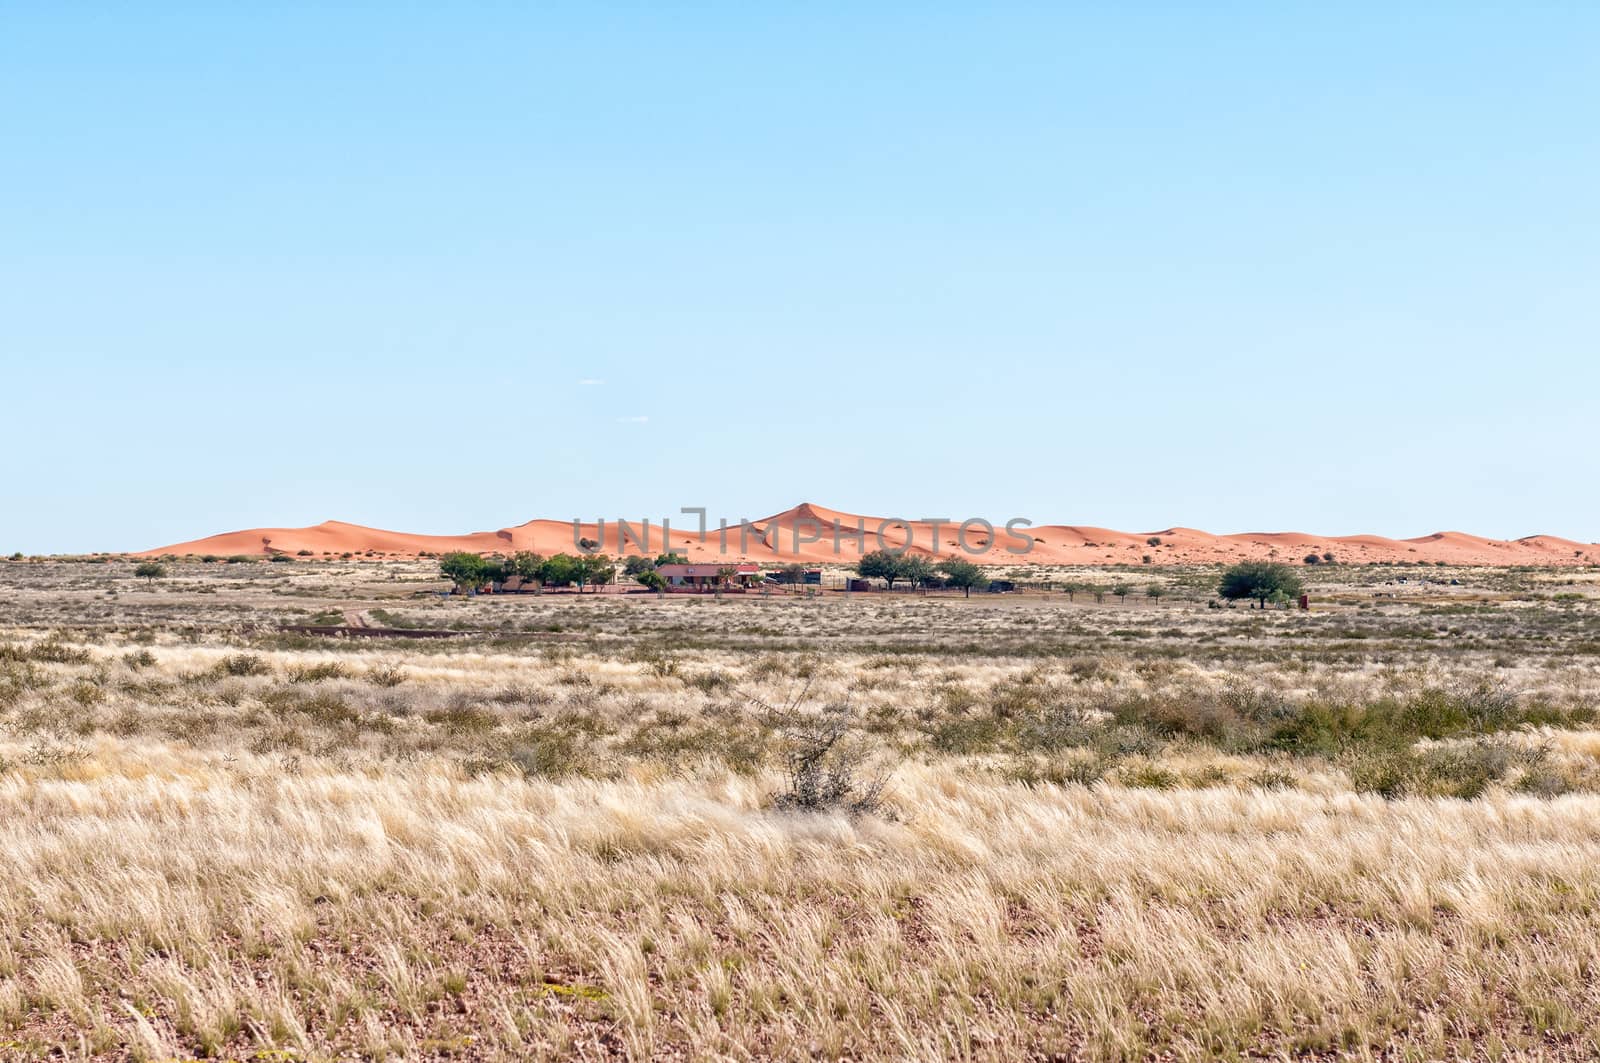 A farm scene in the Kalahari Desert of Namibia. Sand dunes are visible